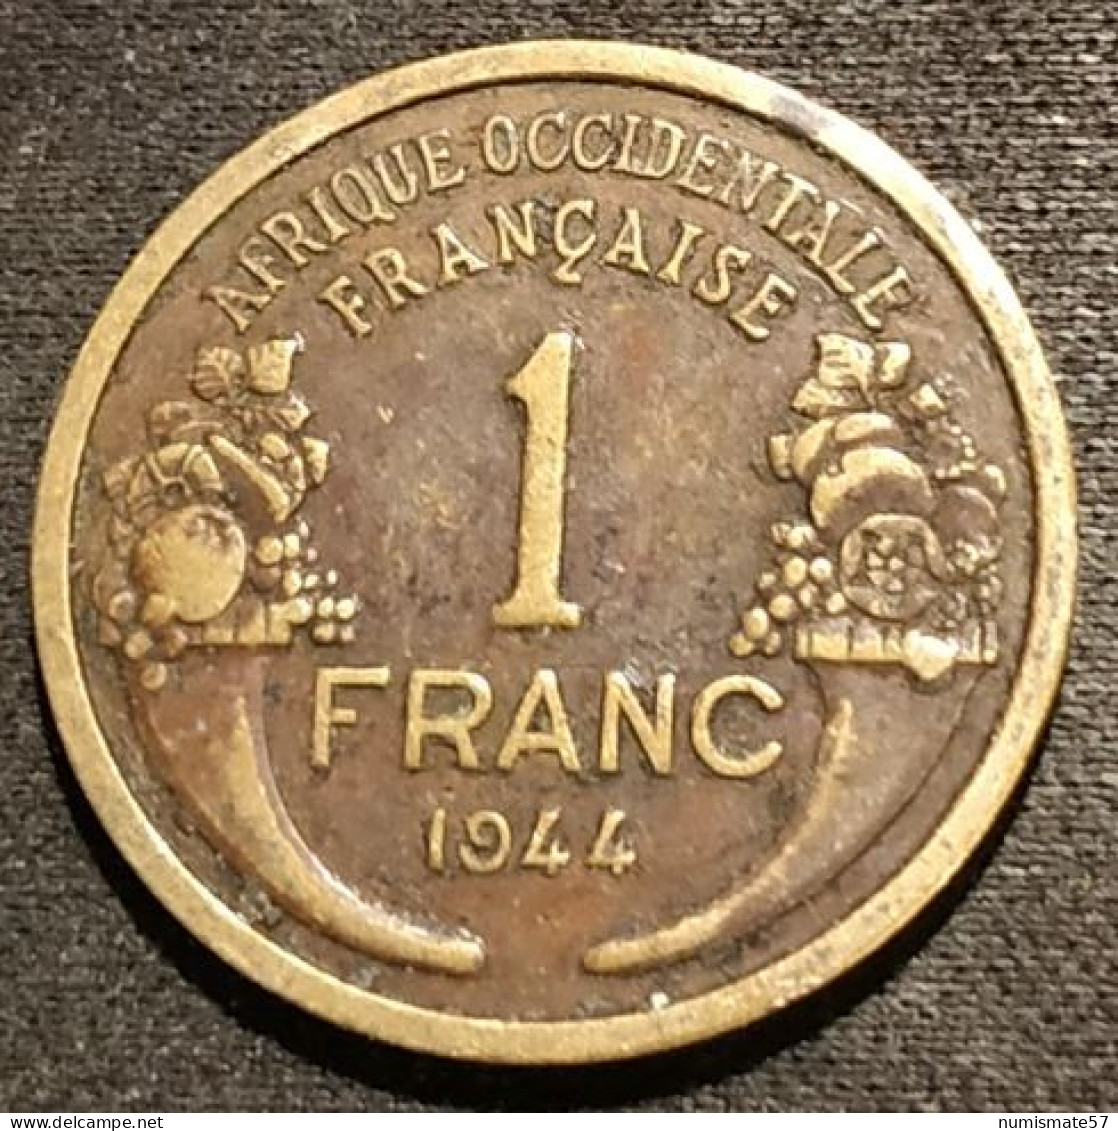 AFRIQUE OCCIDENTALE FRANÇAISE - 1 FRANC 1944 - Morlon - KM 2 - Africa Occidentale Francese